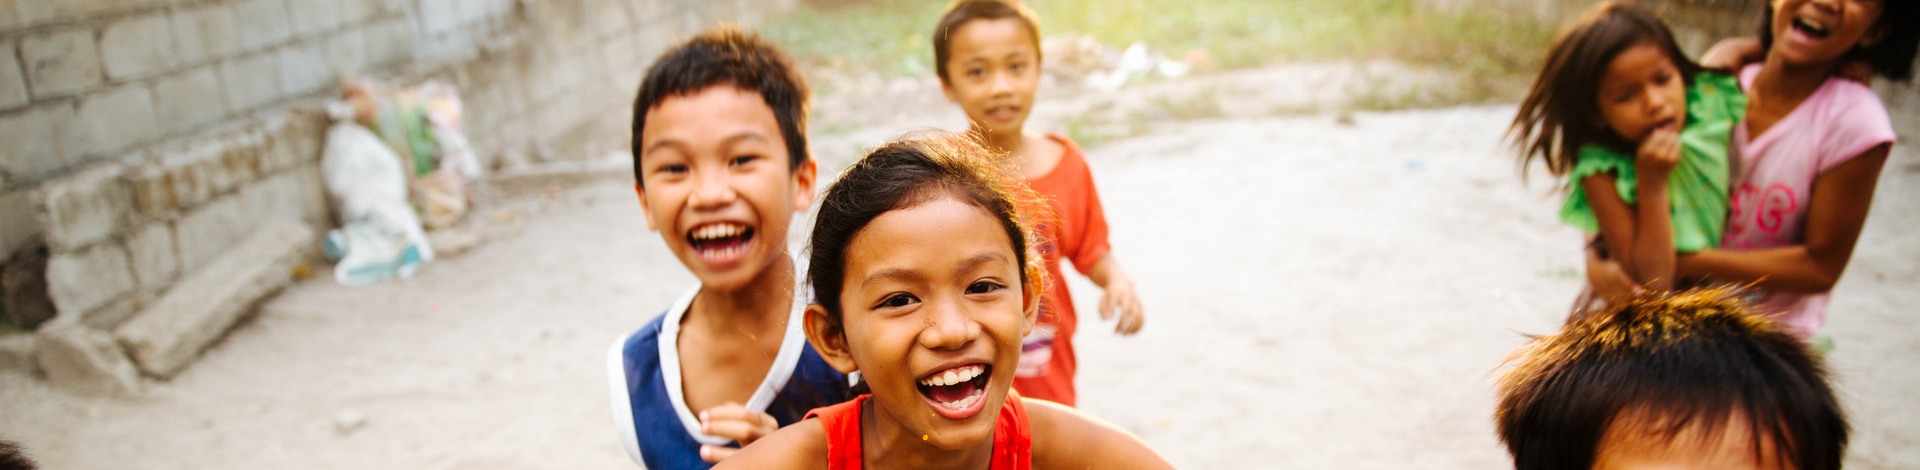 Enfants tribu famille Philippines